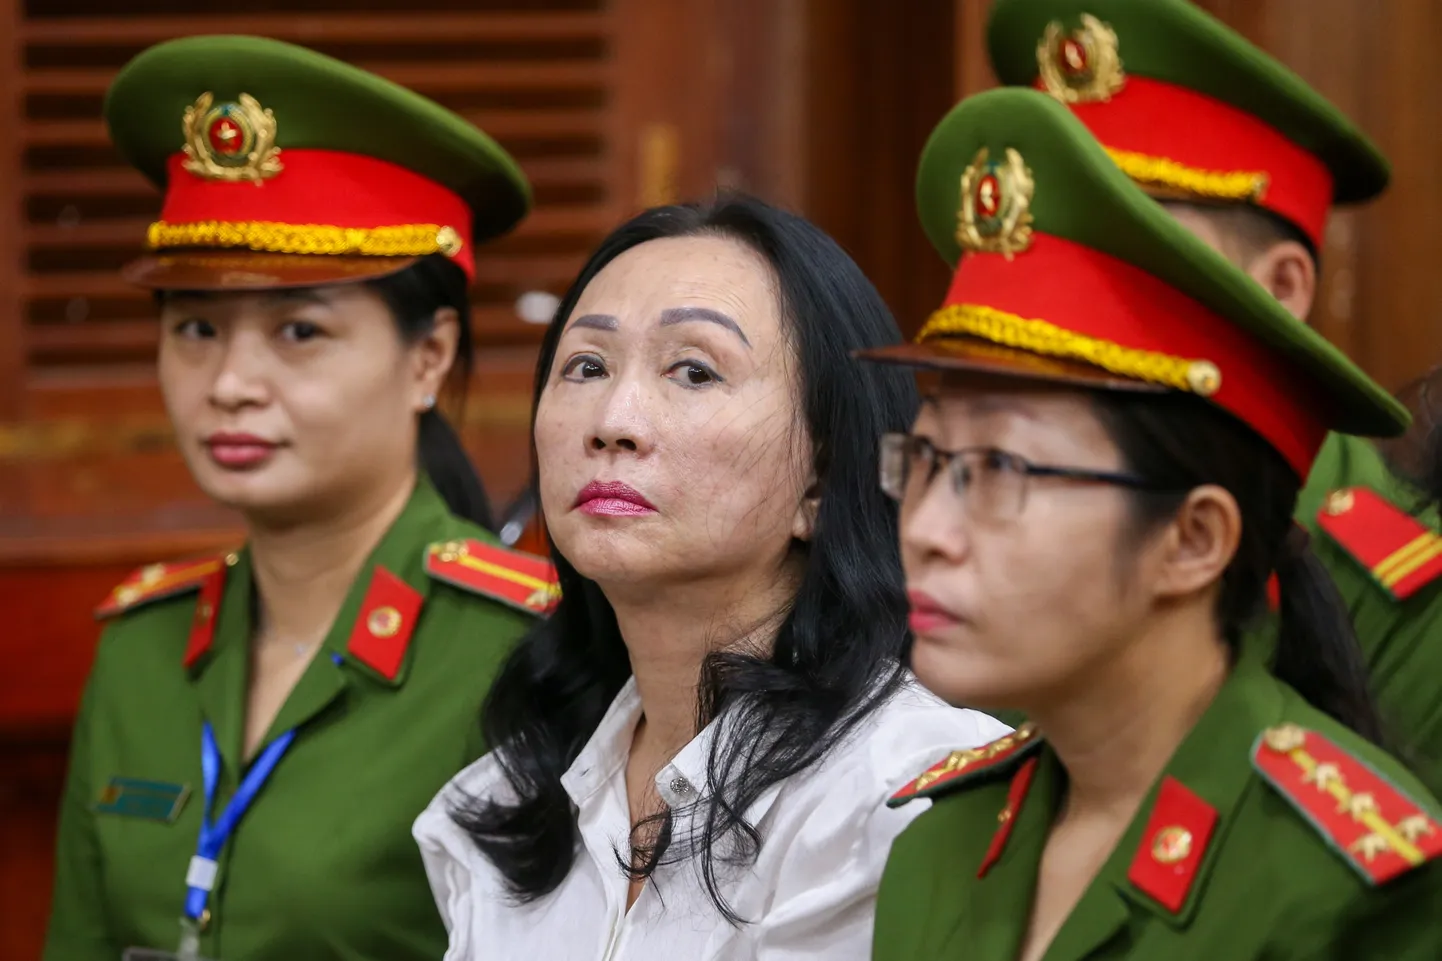 Suurpettuse eest surma mõistetud Vietnami kinnisvaramagnaat Truong My Lan.